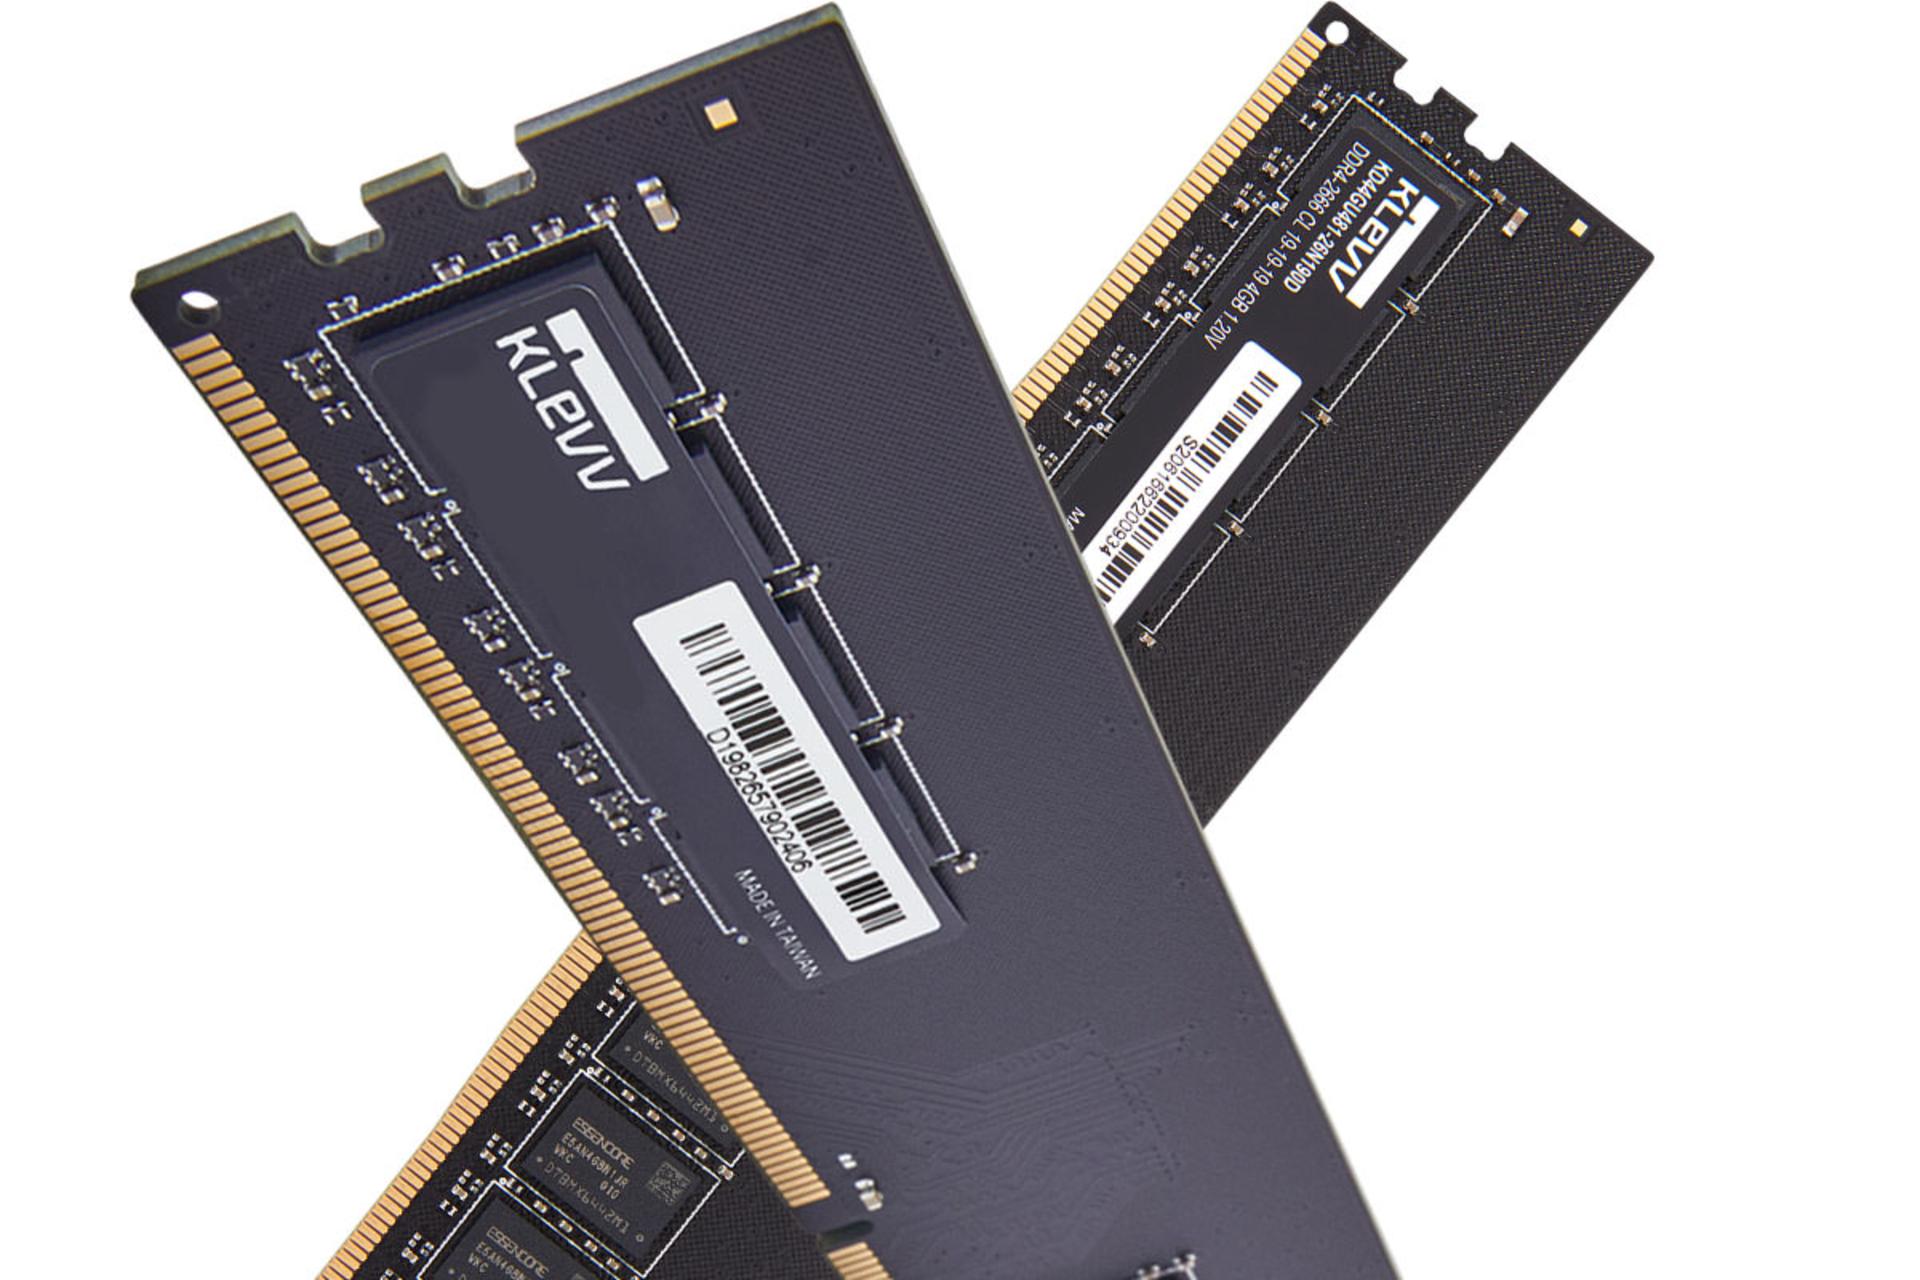  klevv U-DIMM Standard ظرفیت 4 گیگابایت از نوع DDR4-2666 نمای جانبی